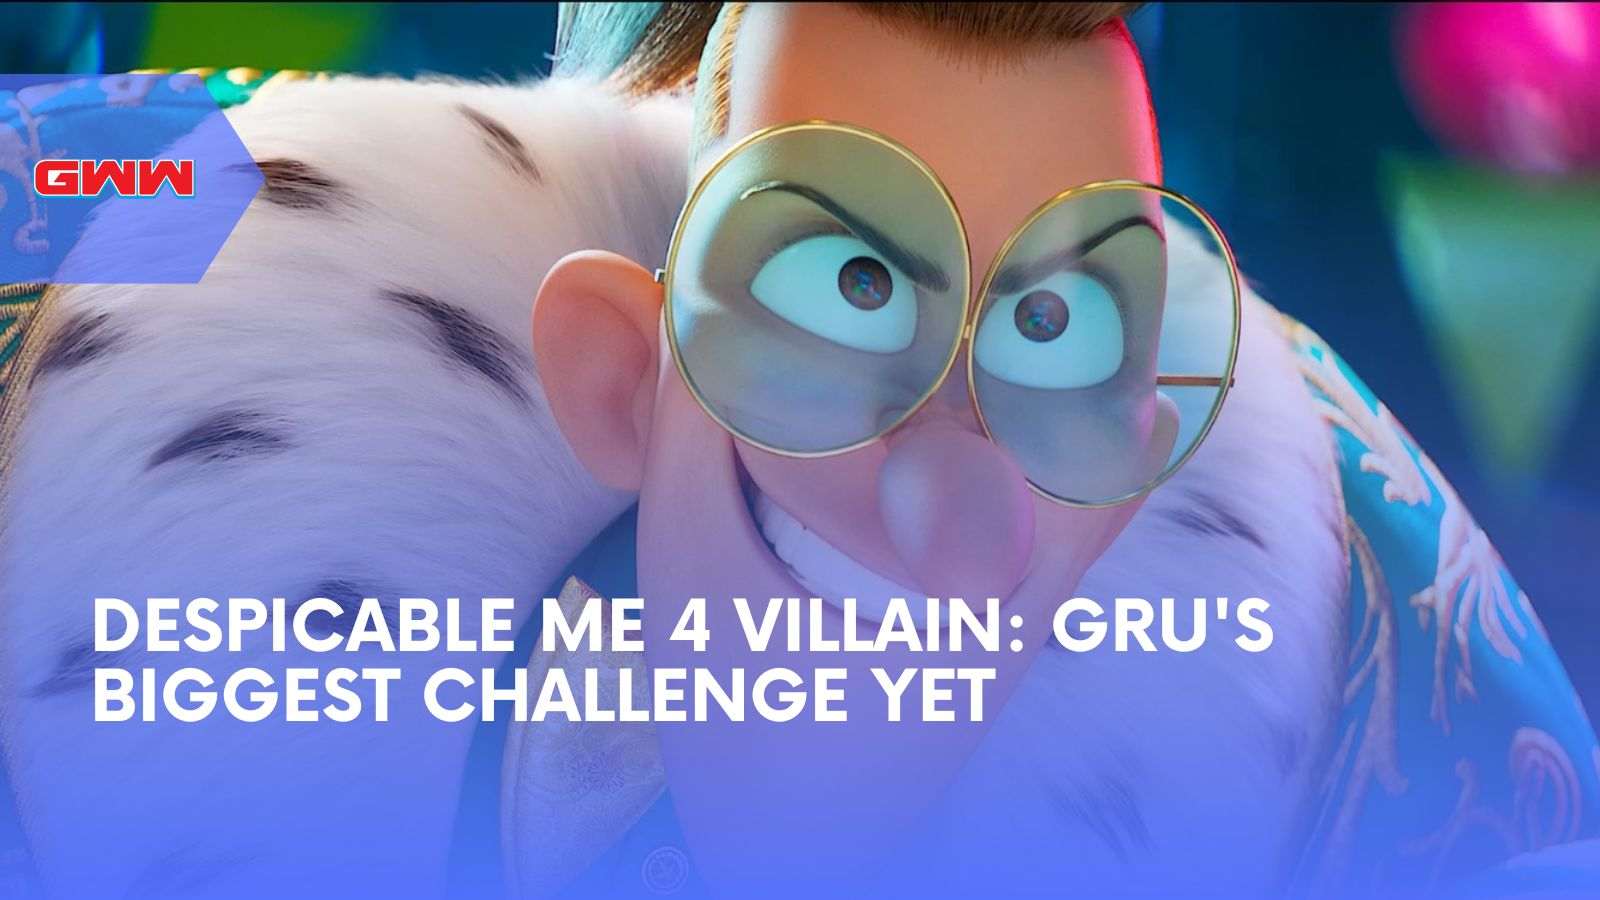 Despicable Me 4 Villain: Gru's Biggest Challenge Yet